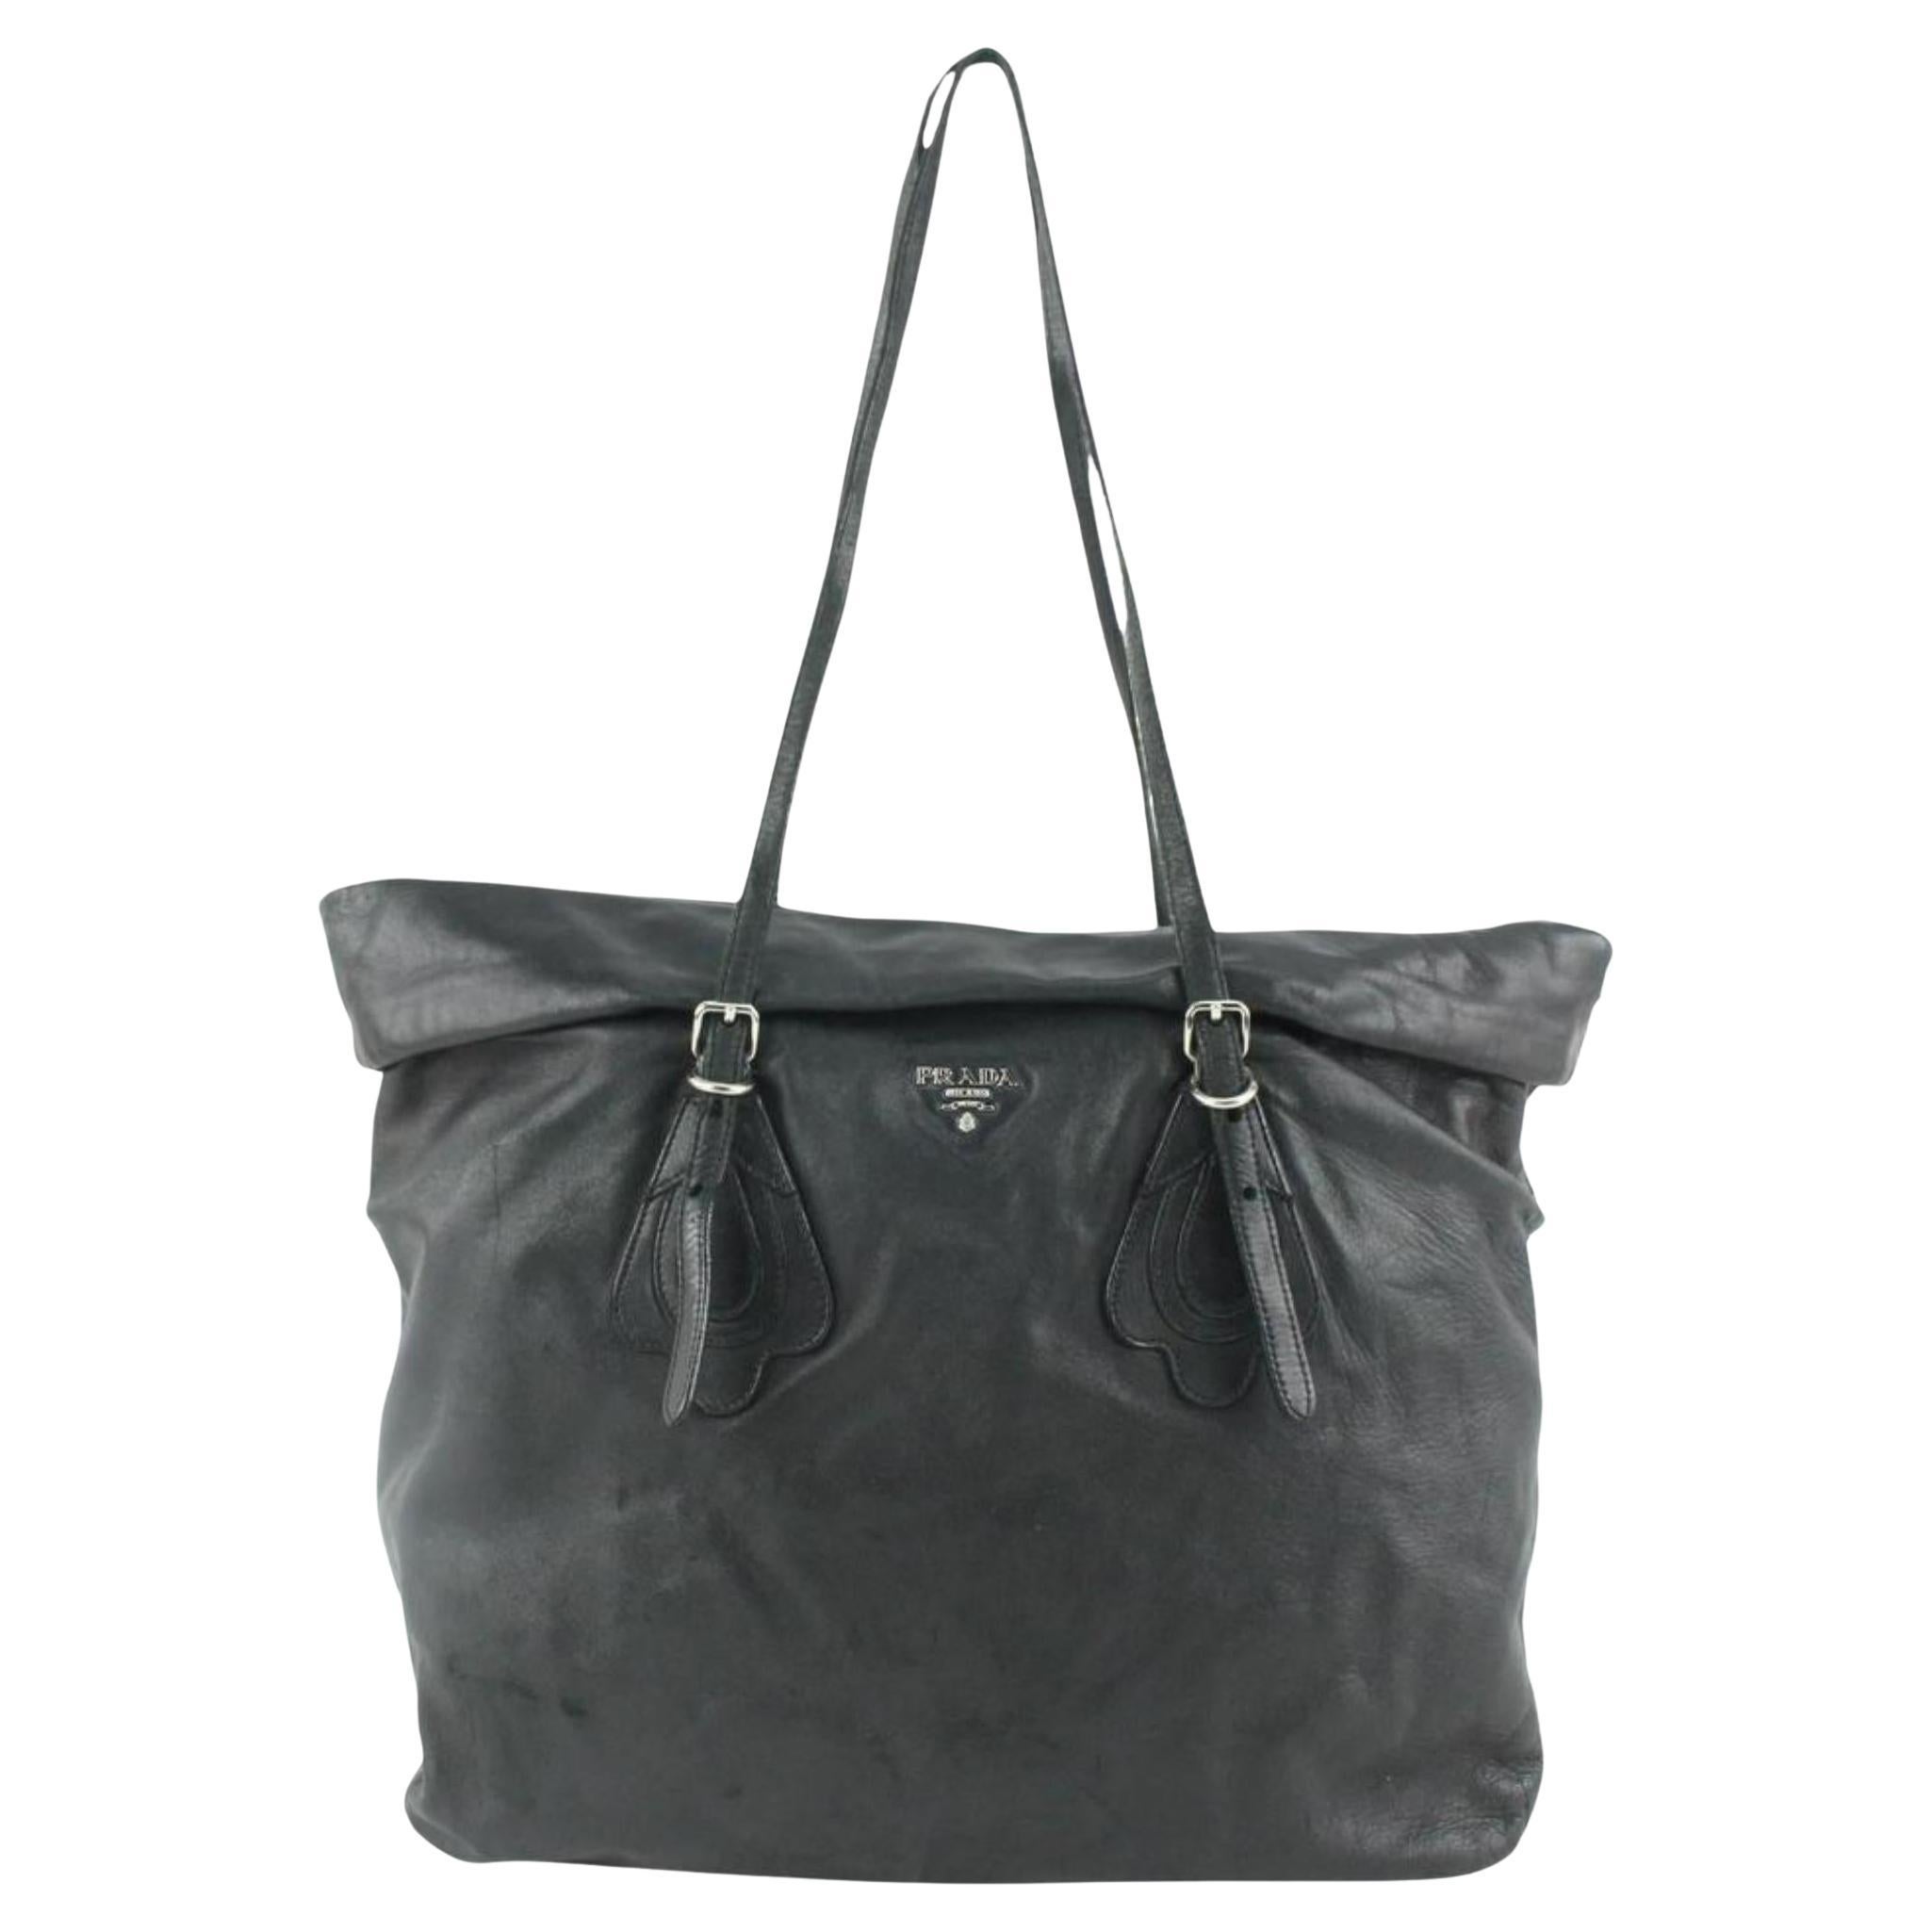 Prada Black Leather Shopper Tote Bag 14p19 For Sale